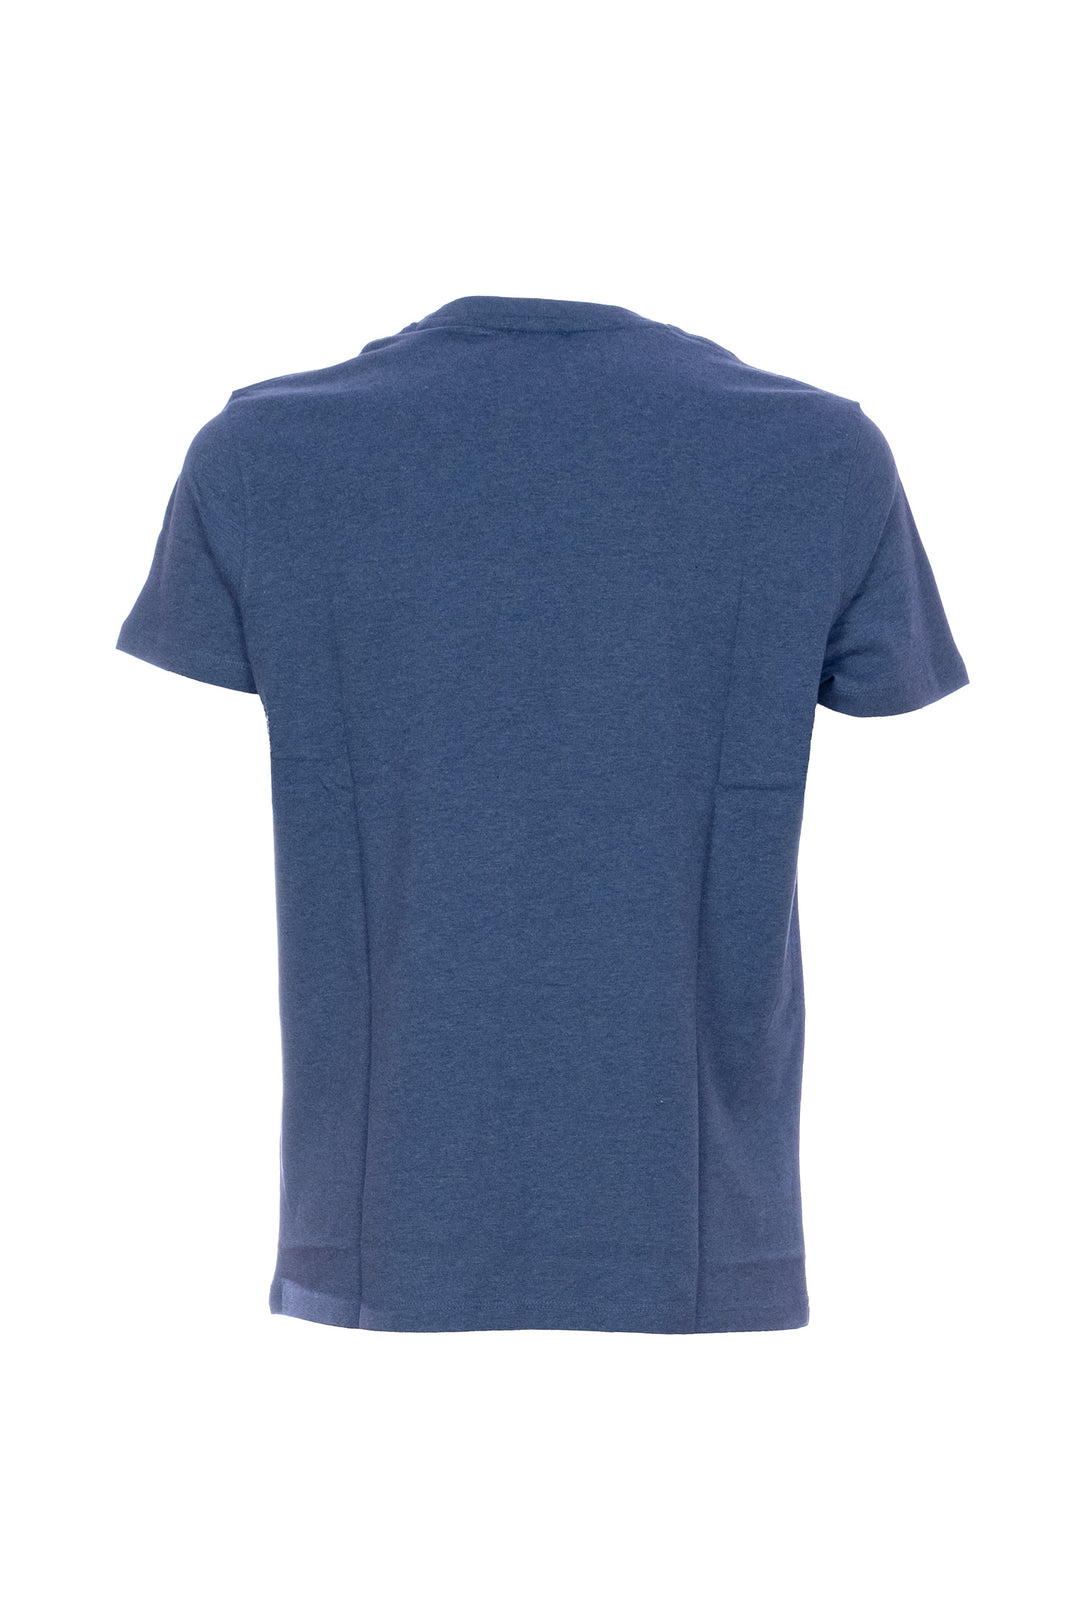 U.S. POLO ASSN. T-shirt blu melange in cotone con logo ricamato - Mancinelli 1954